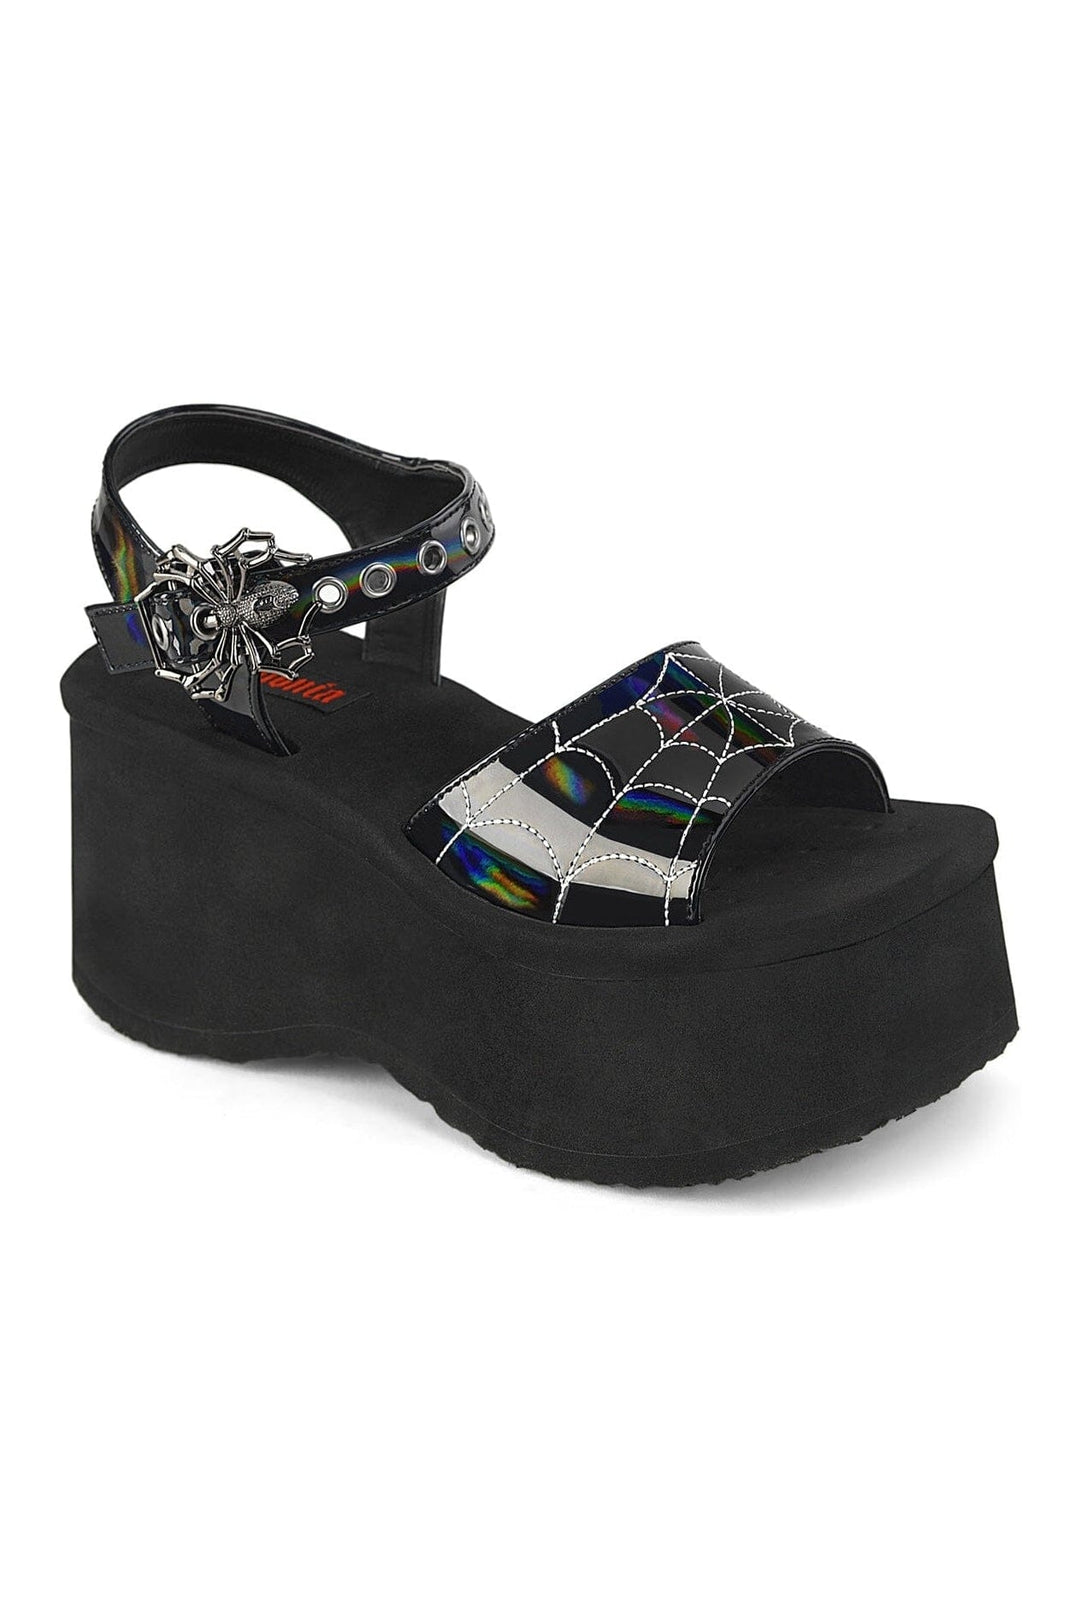 FUNN-10 Black Hologram Patent Sandal-Sandals-Demonia-Black-10-Hologram Patent-SEXYSHOES.COM